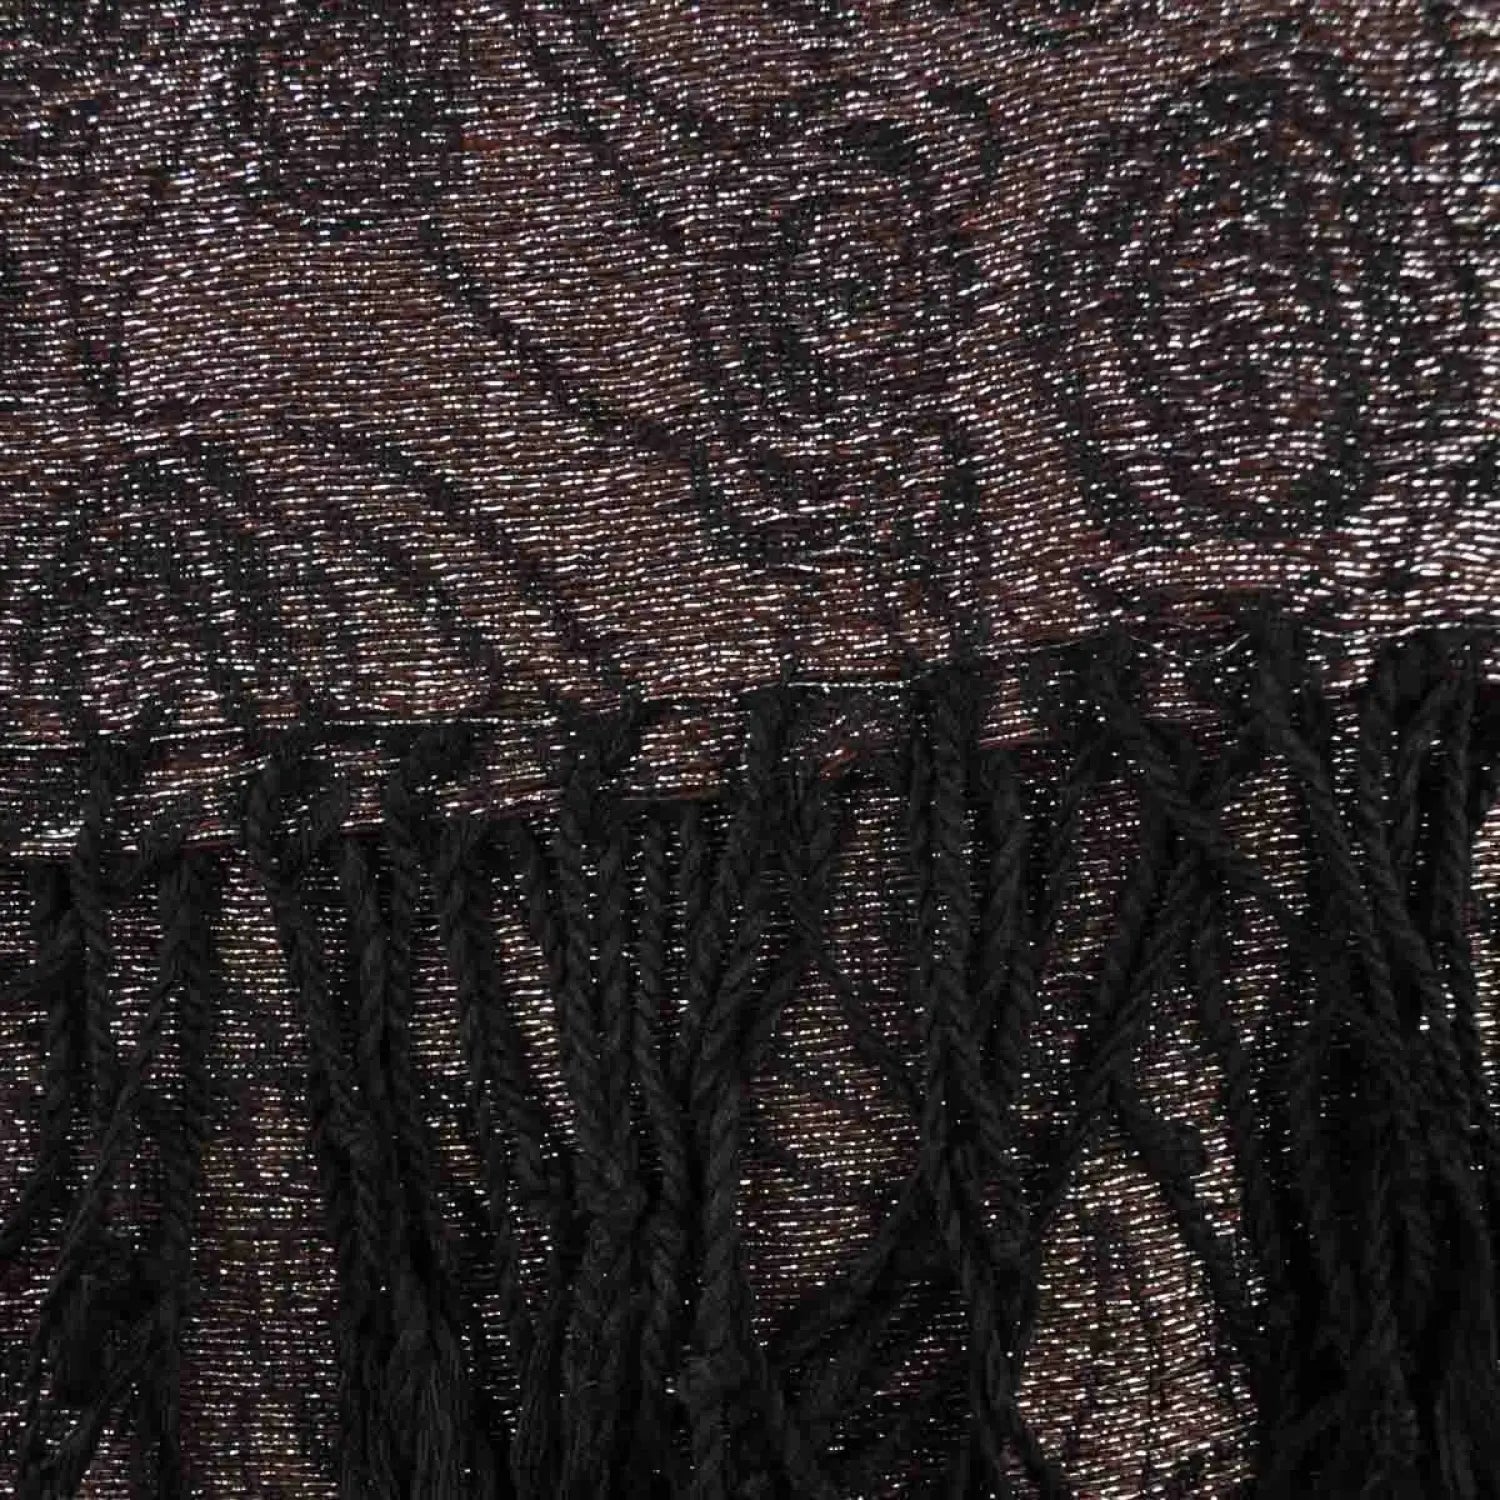 Black fringe sema skirt with metallic floral print from Metallic Floral Print Oversized Tasselled Scarf